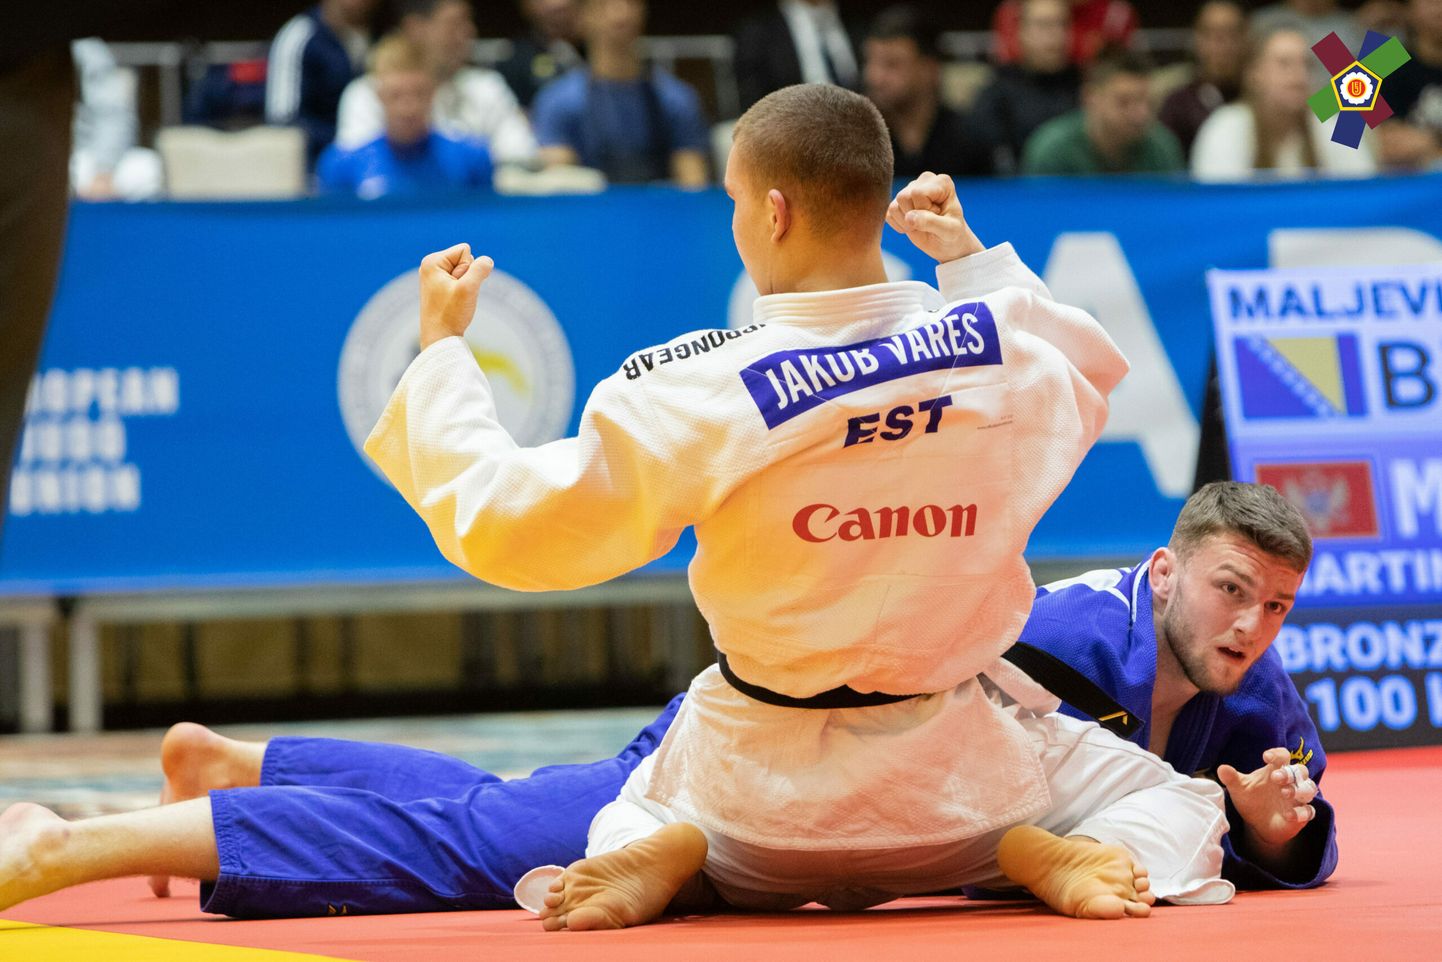 Tartu judoka Jakob Vares pivõitis kokku neli matši.